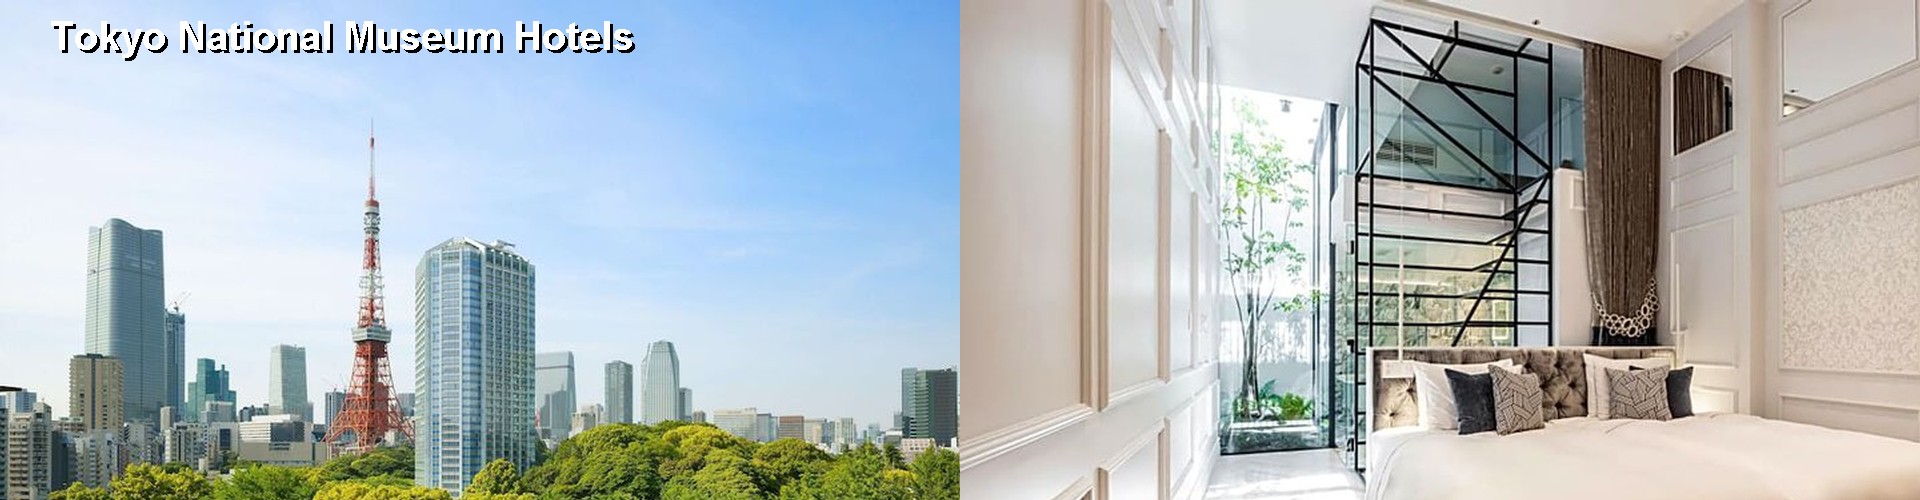 5 Best Hotels near Tokyo National Museum